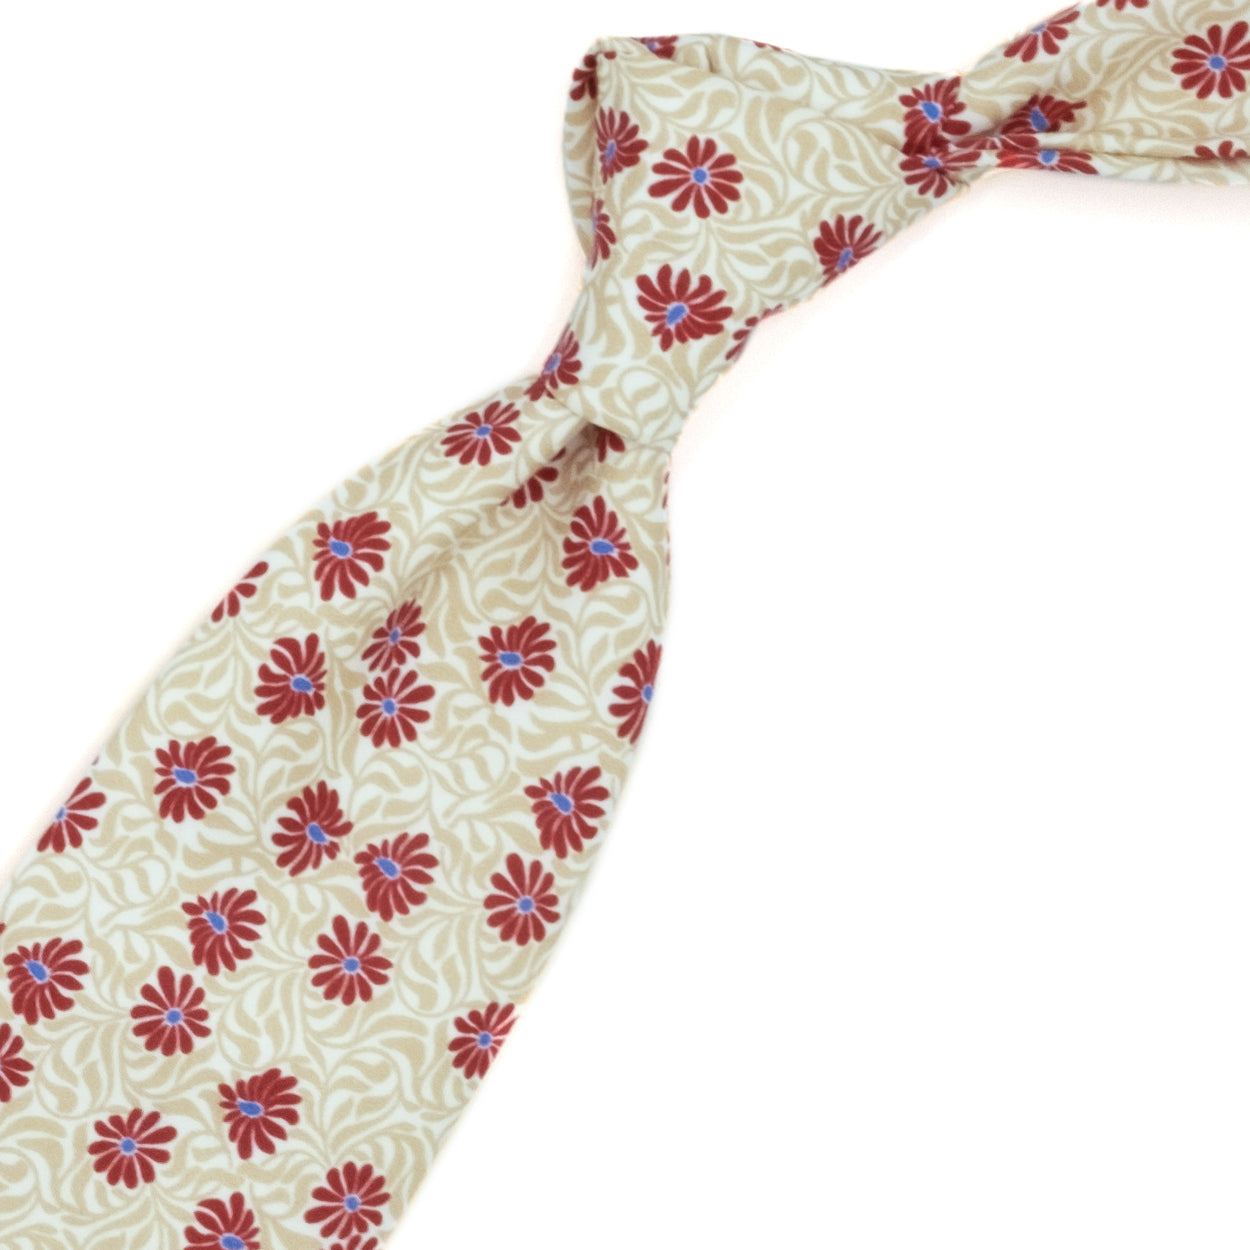 Cravatta beige con fiori rossi